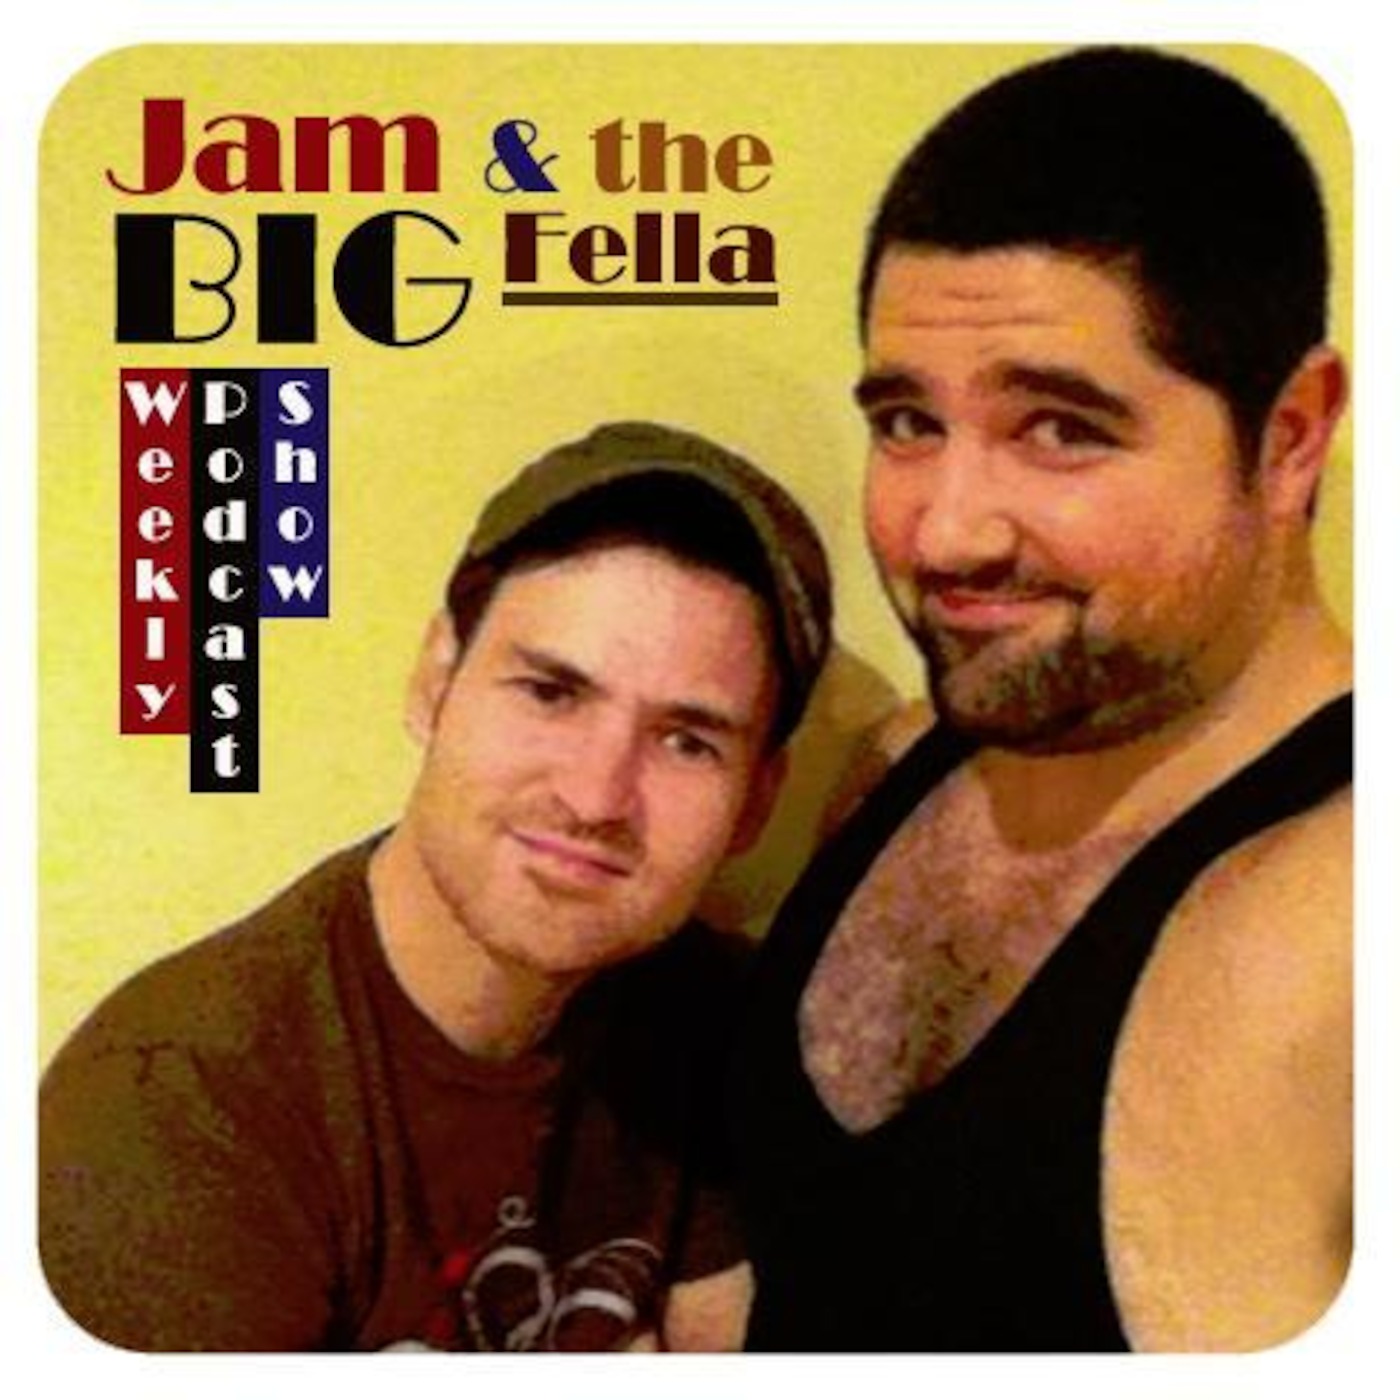 Jam and the BIG fella